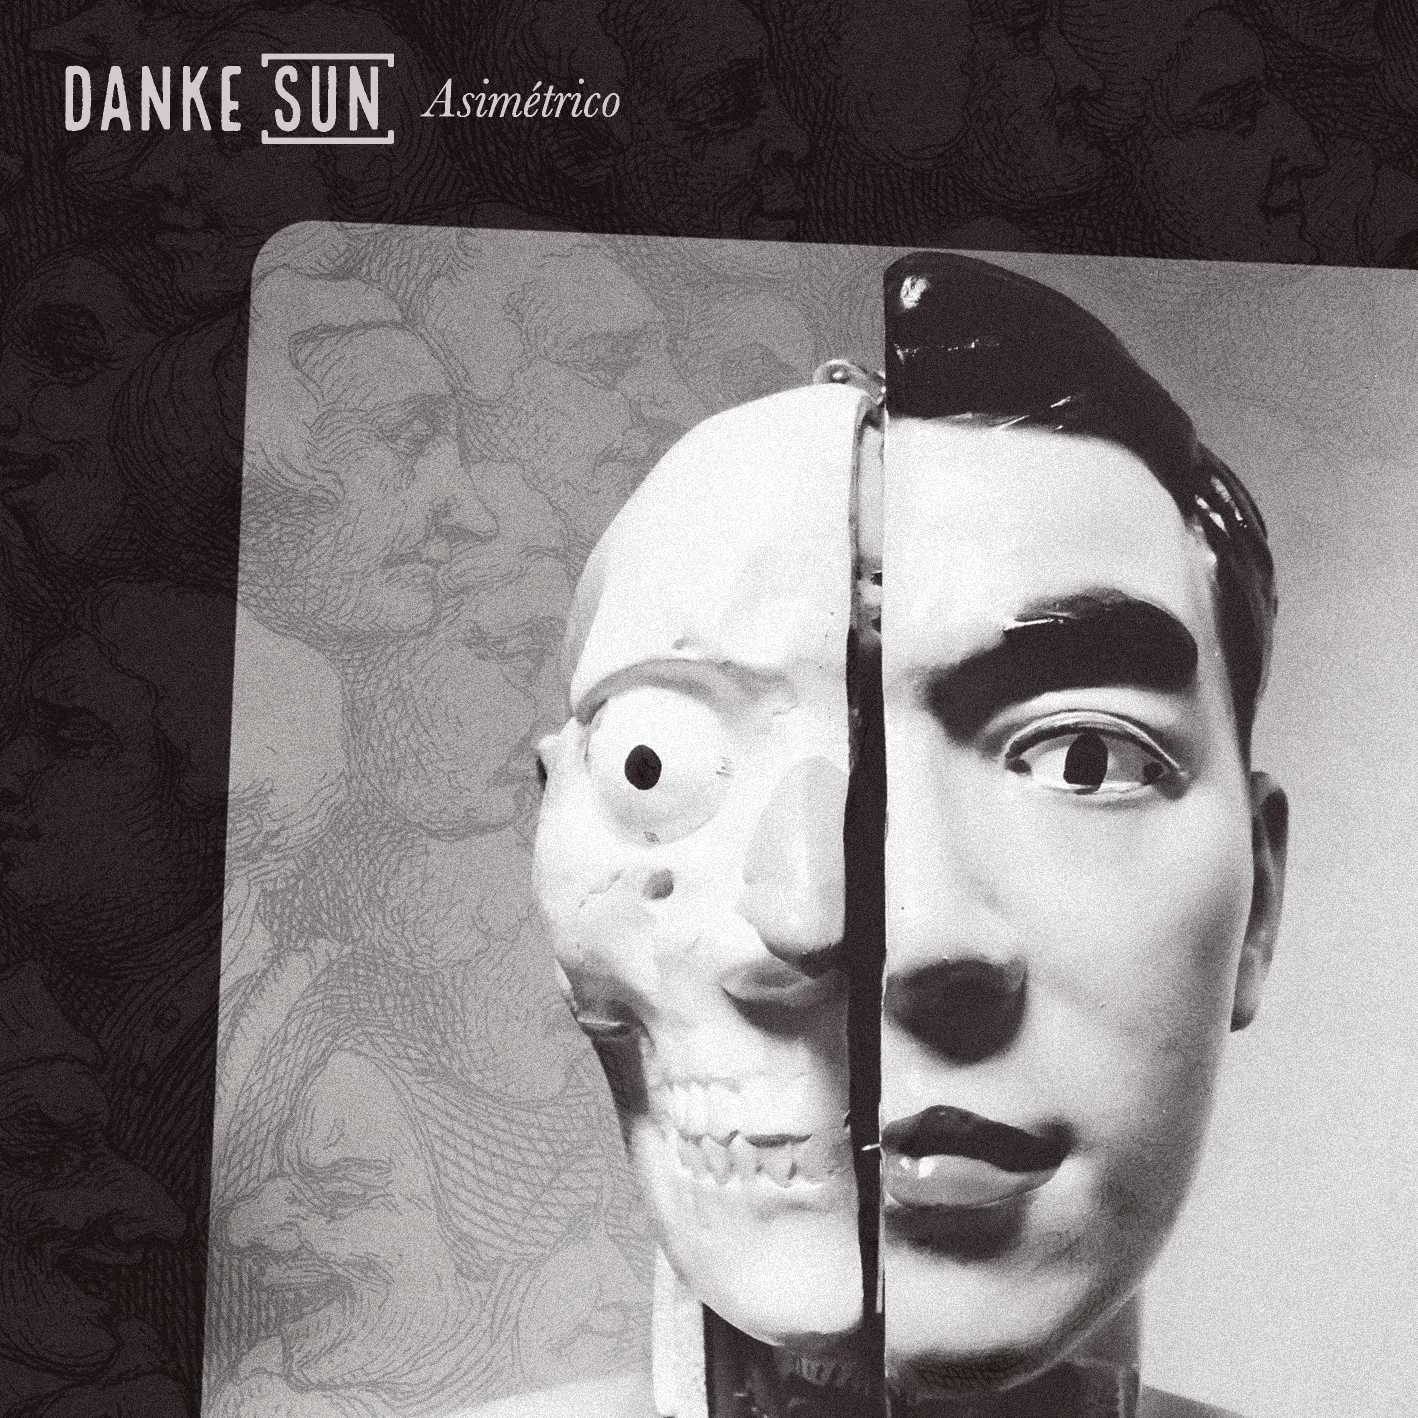 Album cover for “Asimétrico” by Danke Sun